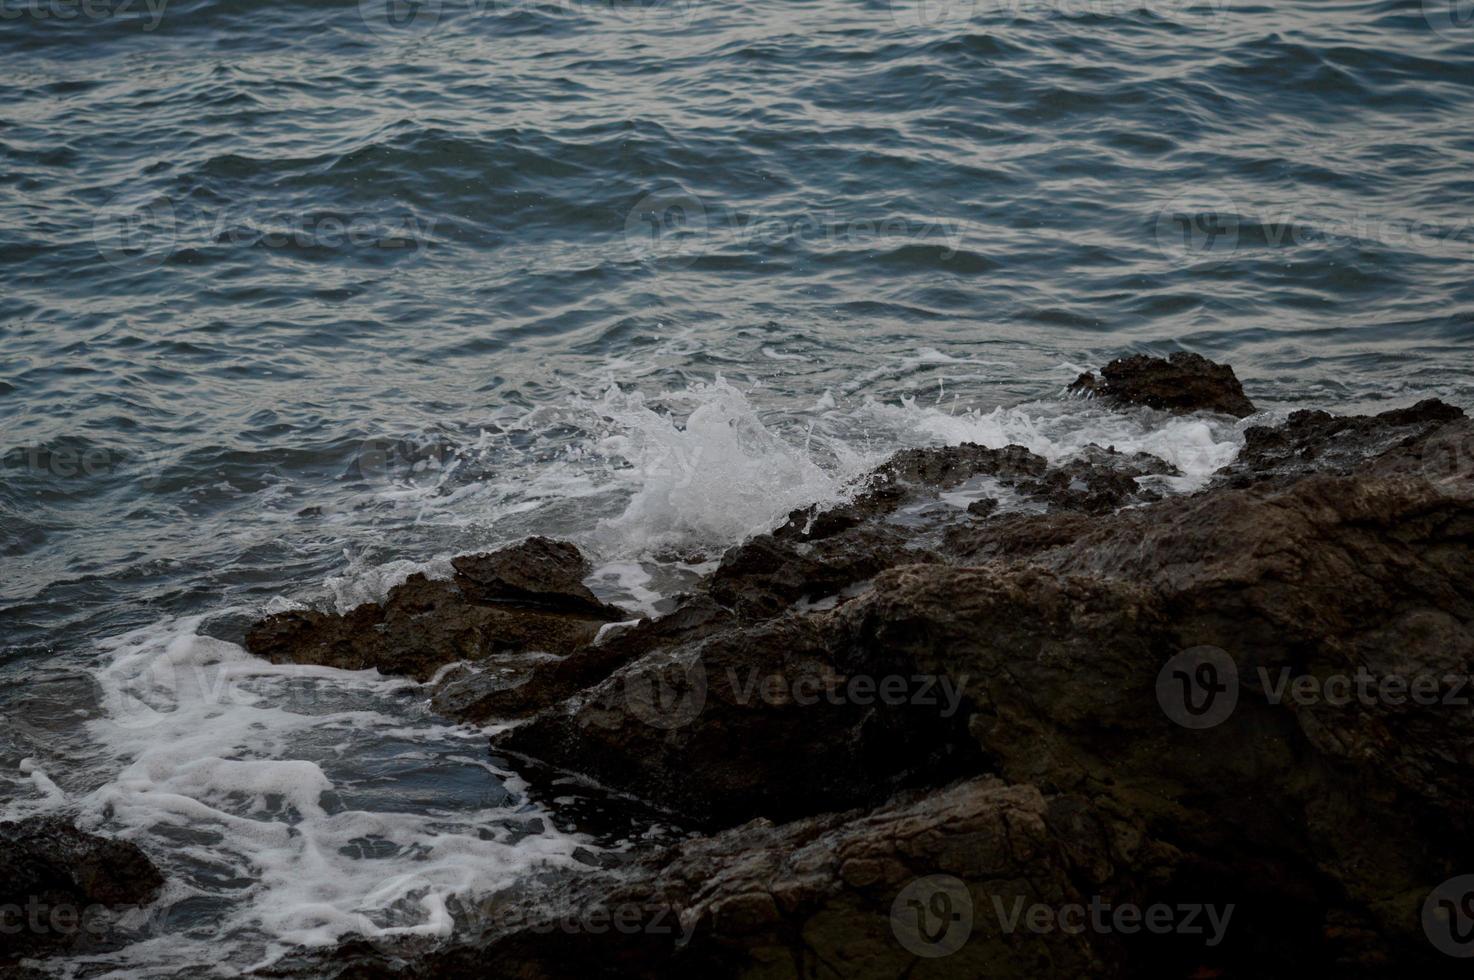 hav vågor kraschar in i rocks. foto